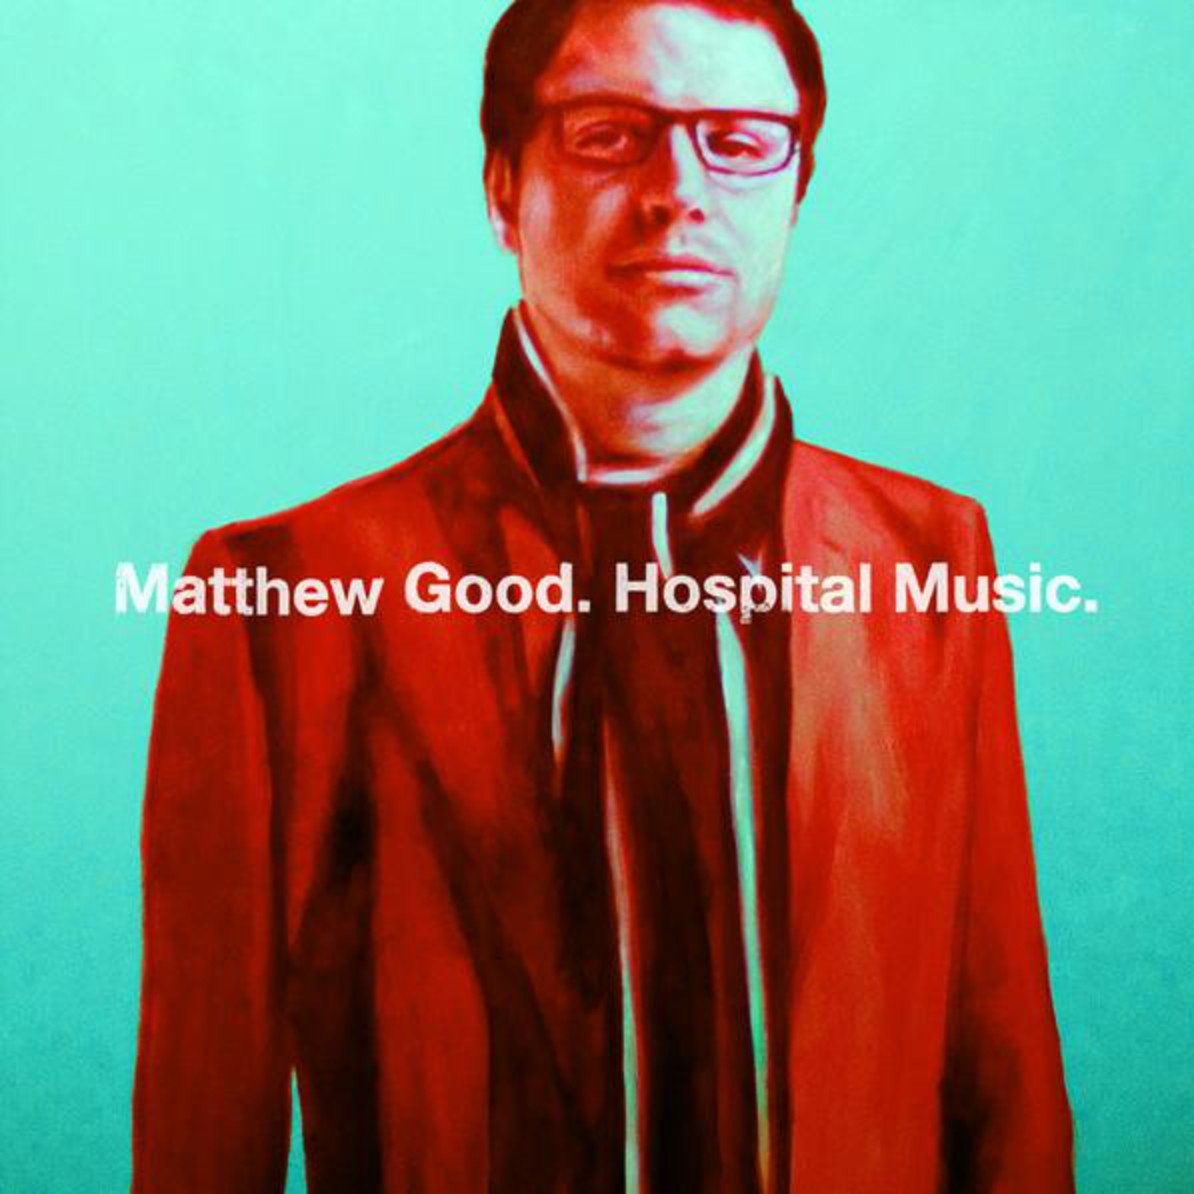 Hospital Music